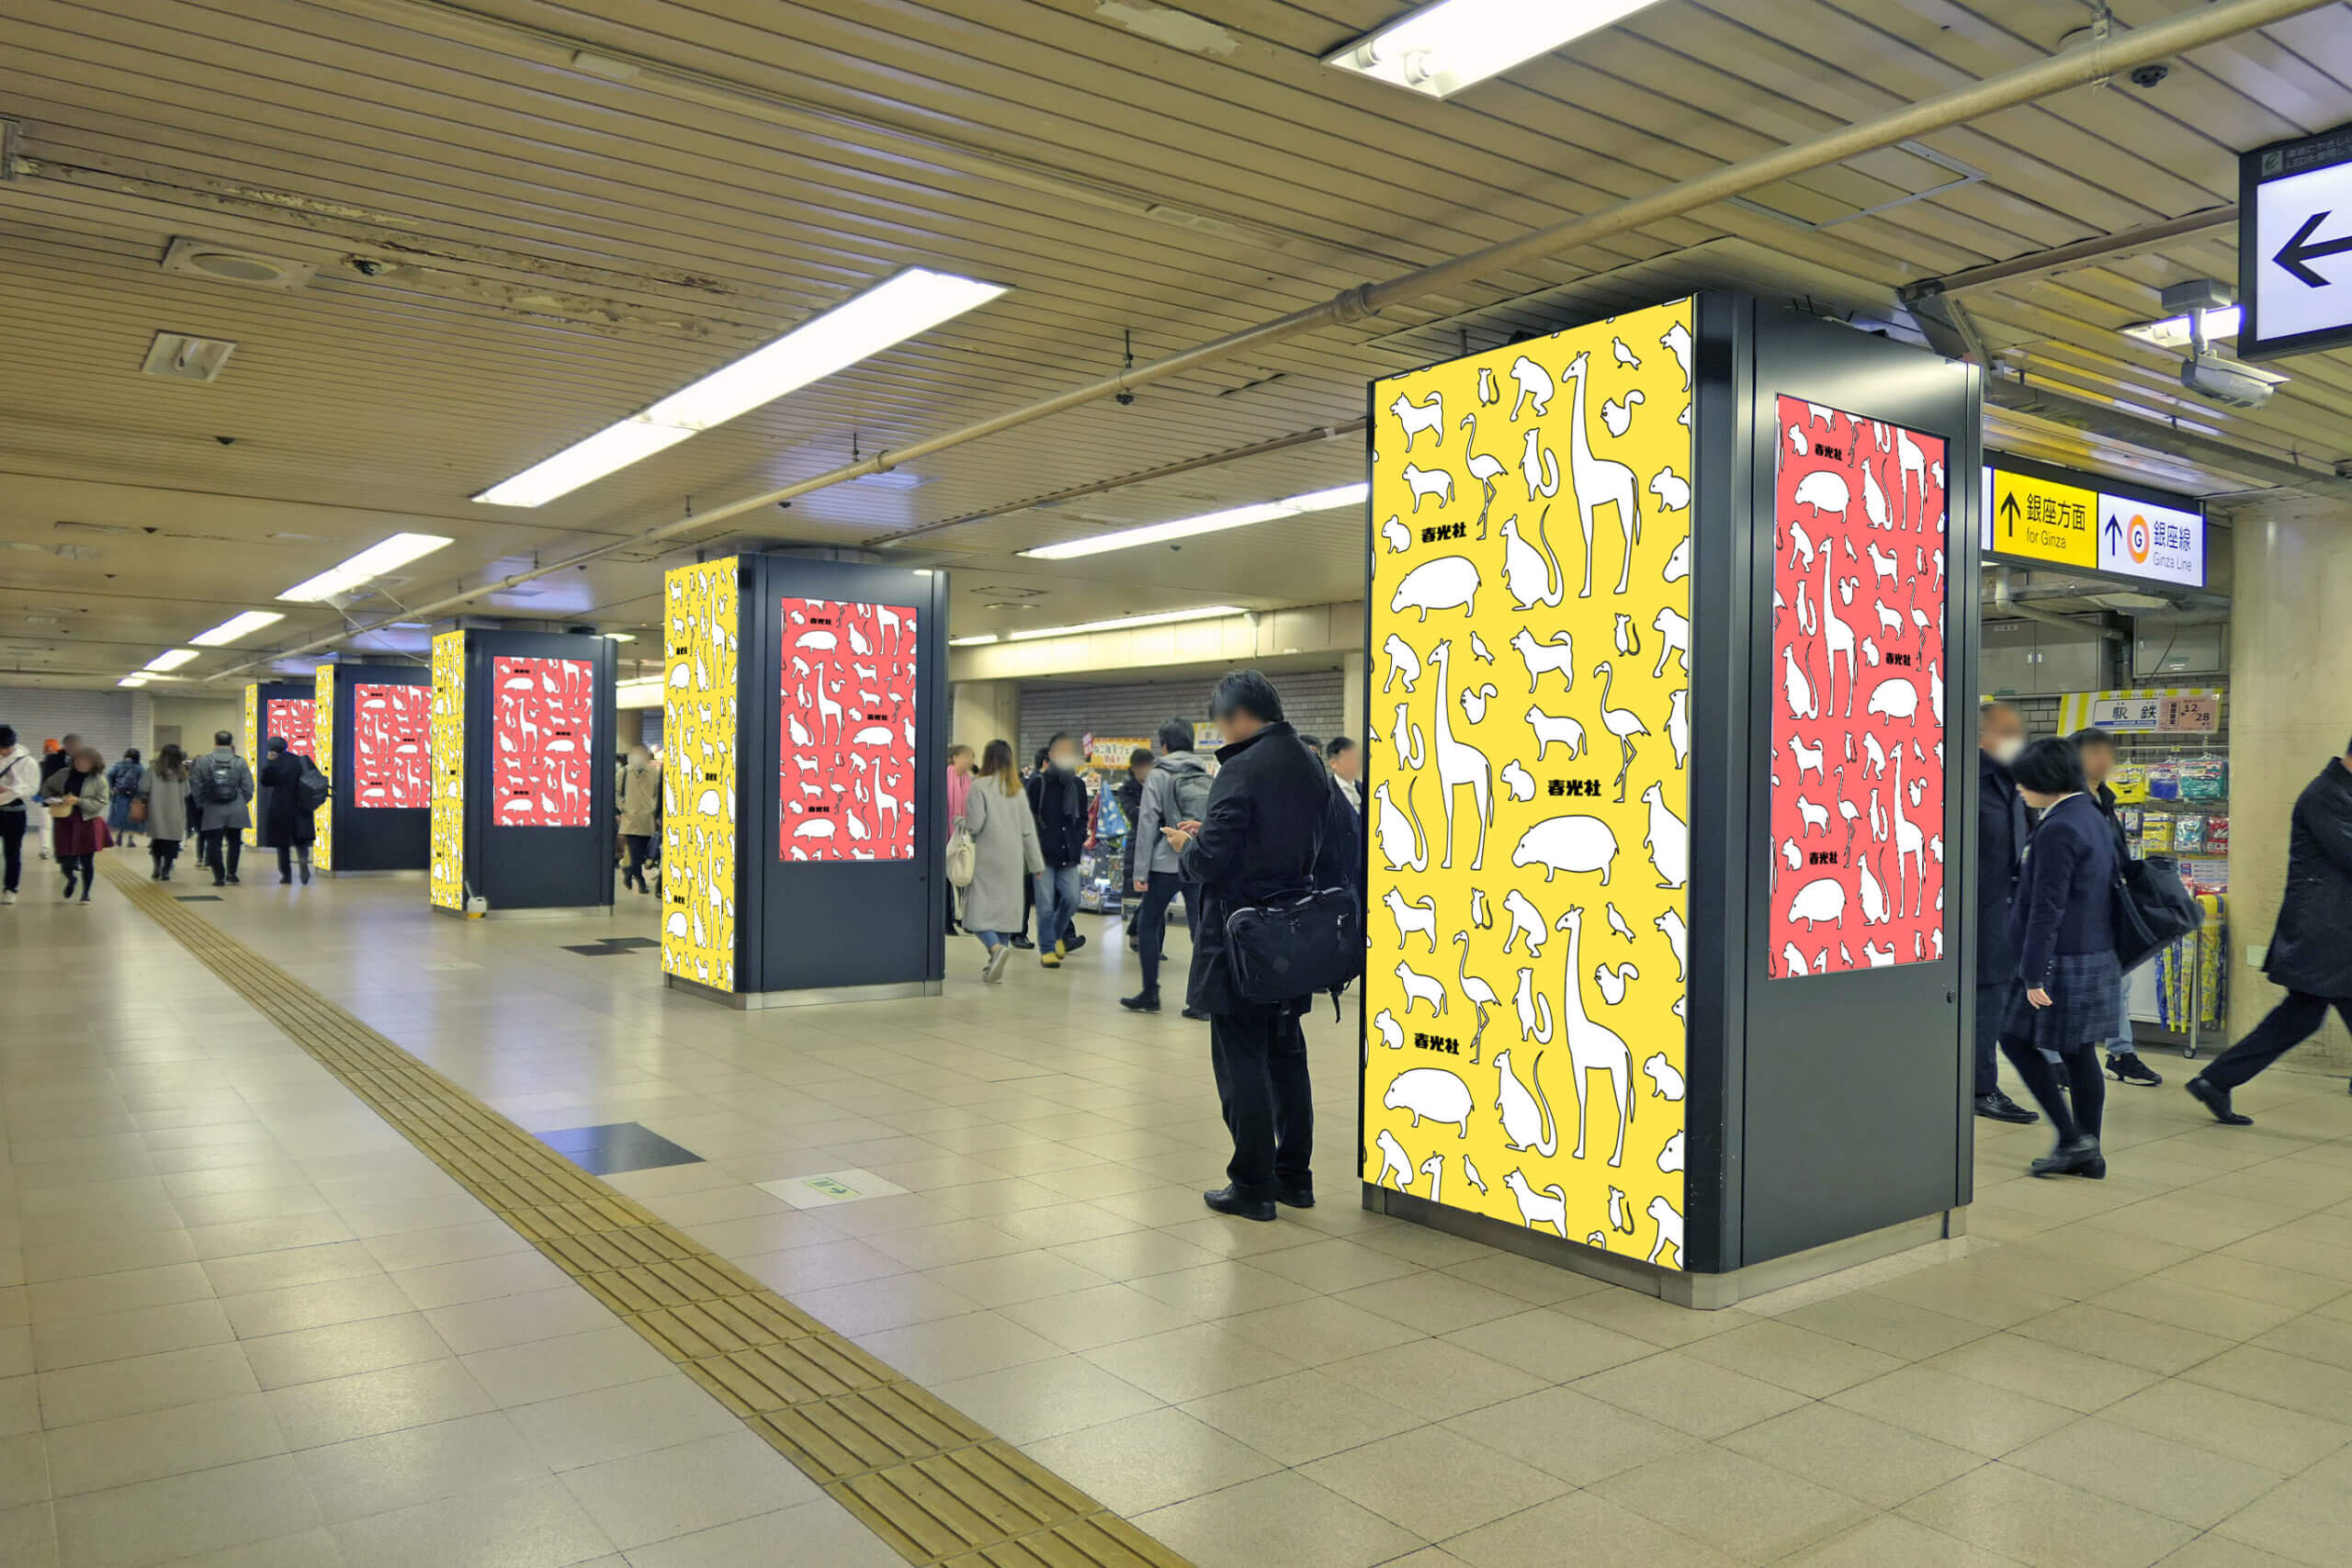 JR東日本新橋駅銀座線乗換方面地下通路に設置されている縦型デジタルサイネージとシート